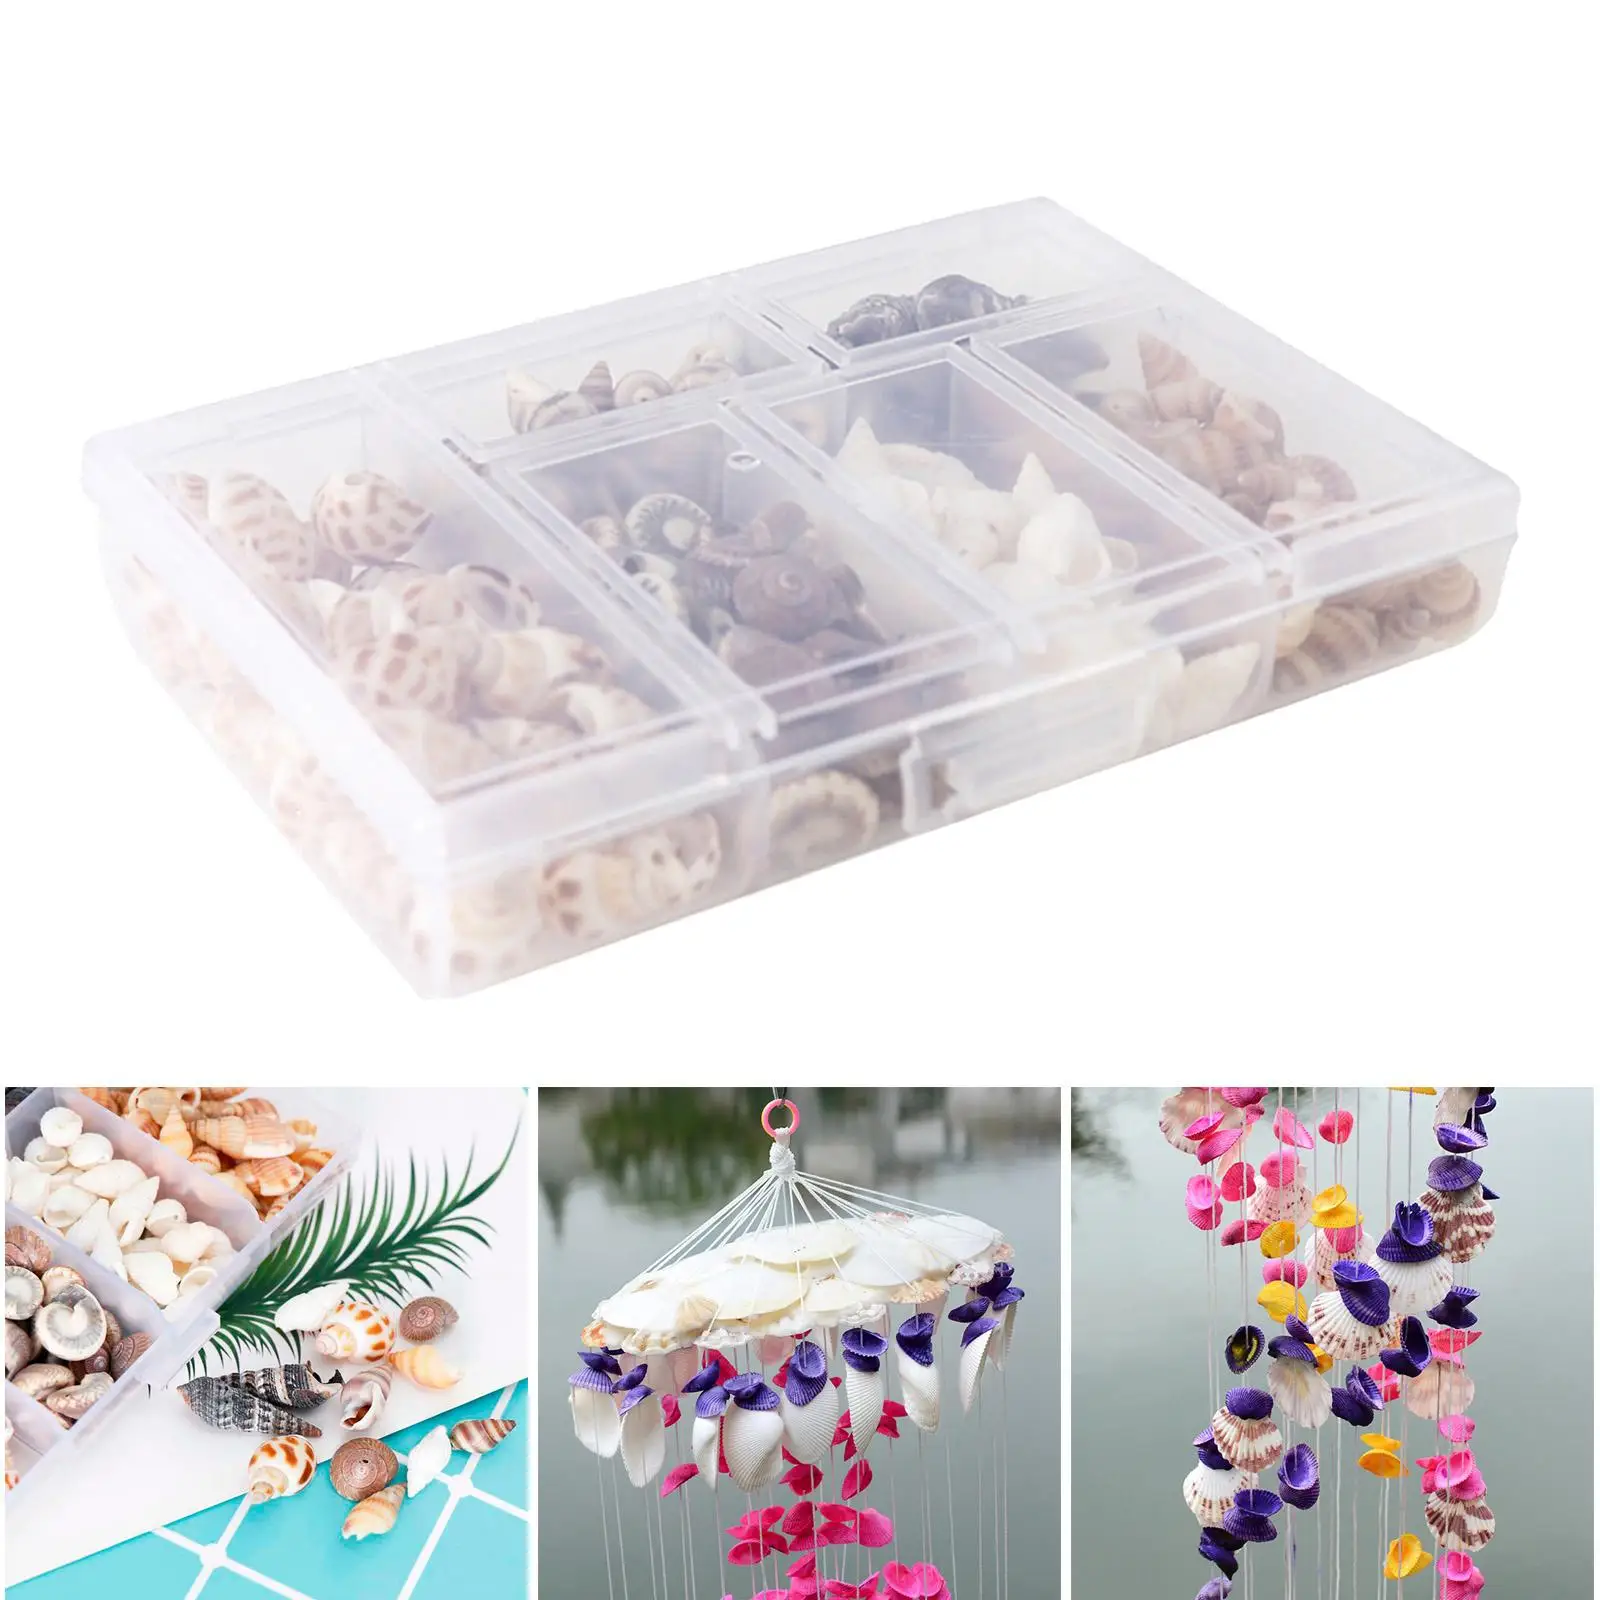 100g Beach Sea Shells Beads Natural Seashells for Fish Tank, Beach Theme Party,